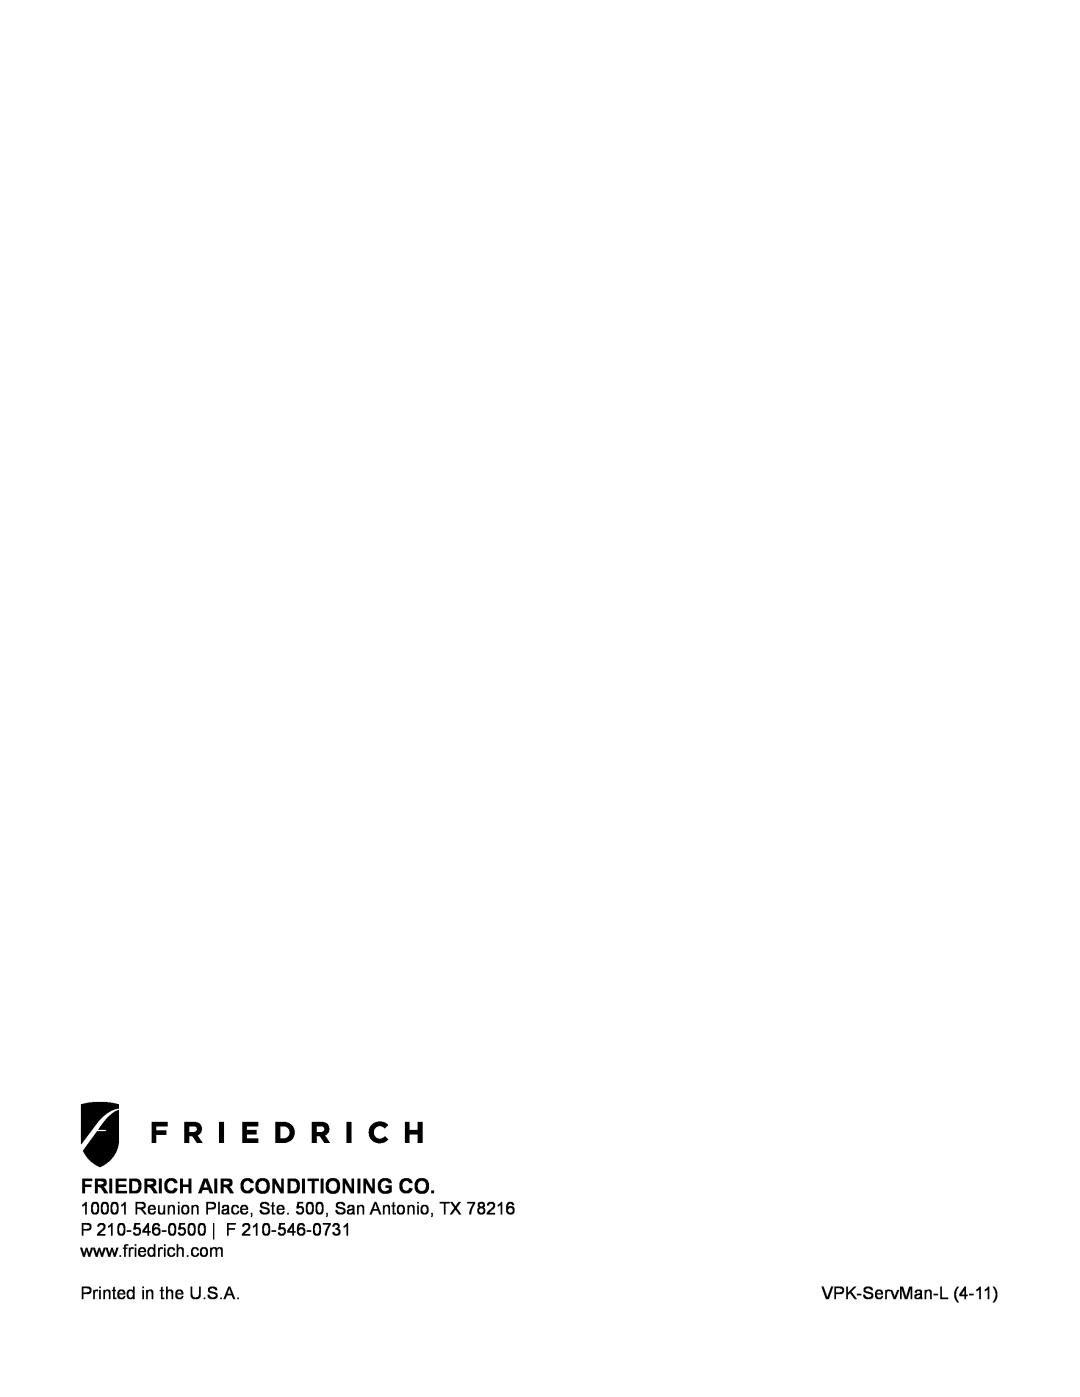 Friedrich R410A manual Friedrich Air Conditioning Co, Printed in the U.S.A, VPK-ServMan-L 